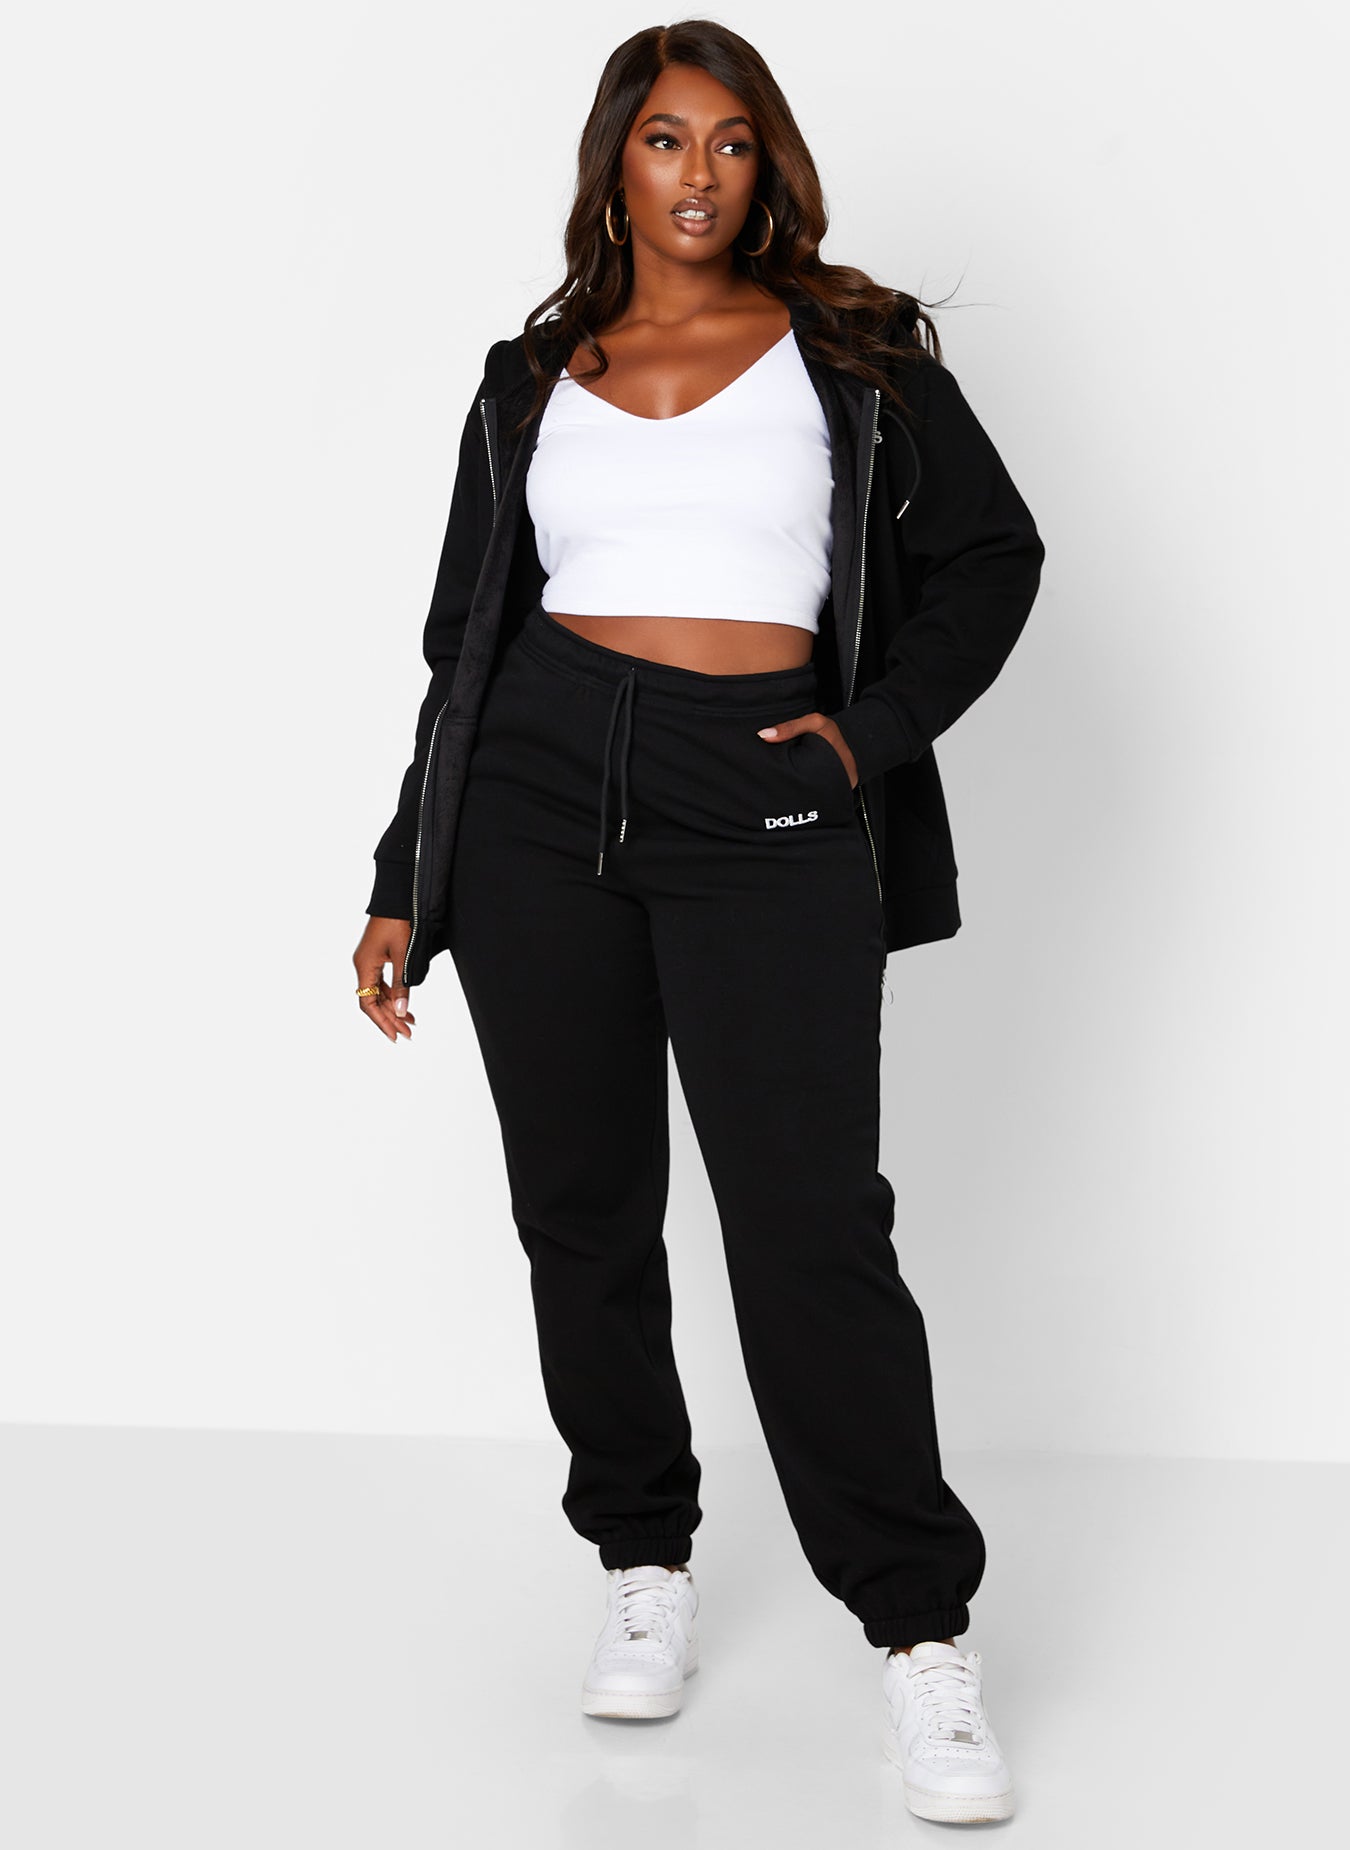 Black Goals Embroidered Oversized Zip Up Sweatshirt Plus Sizes